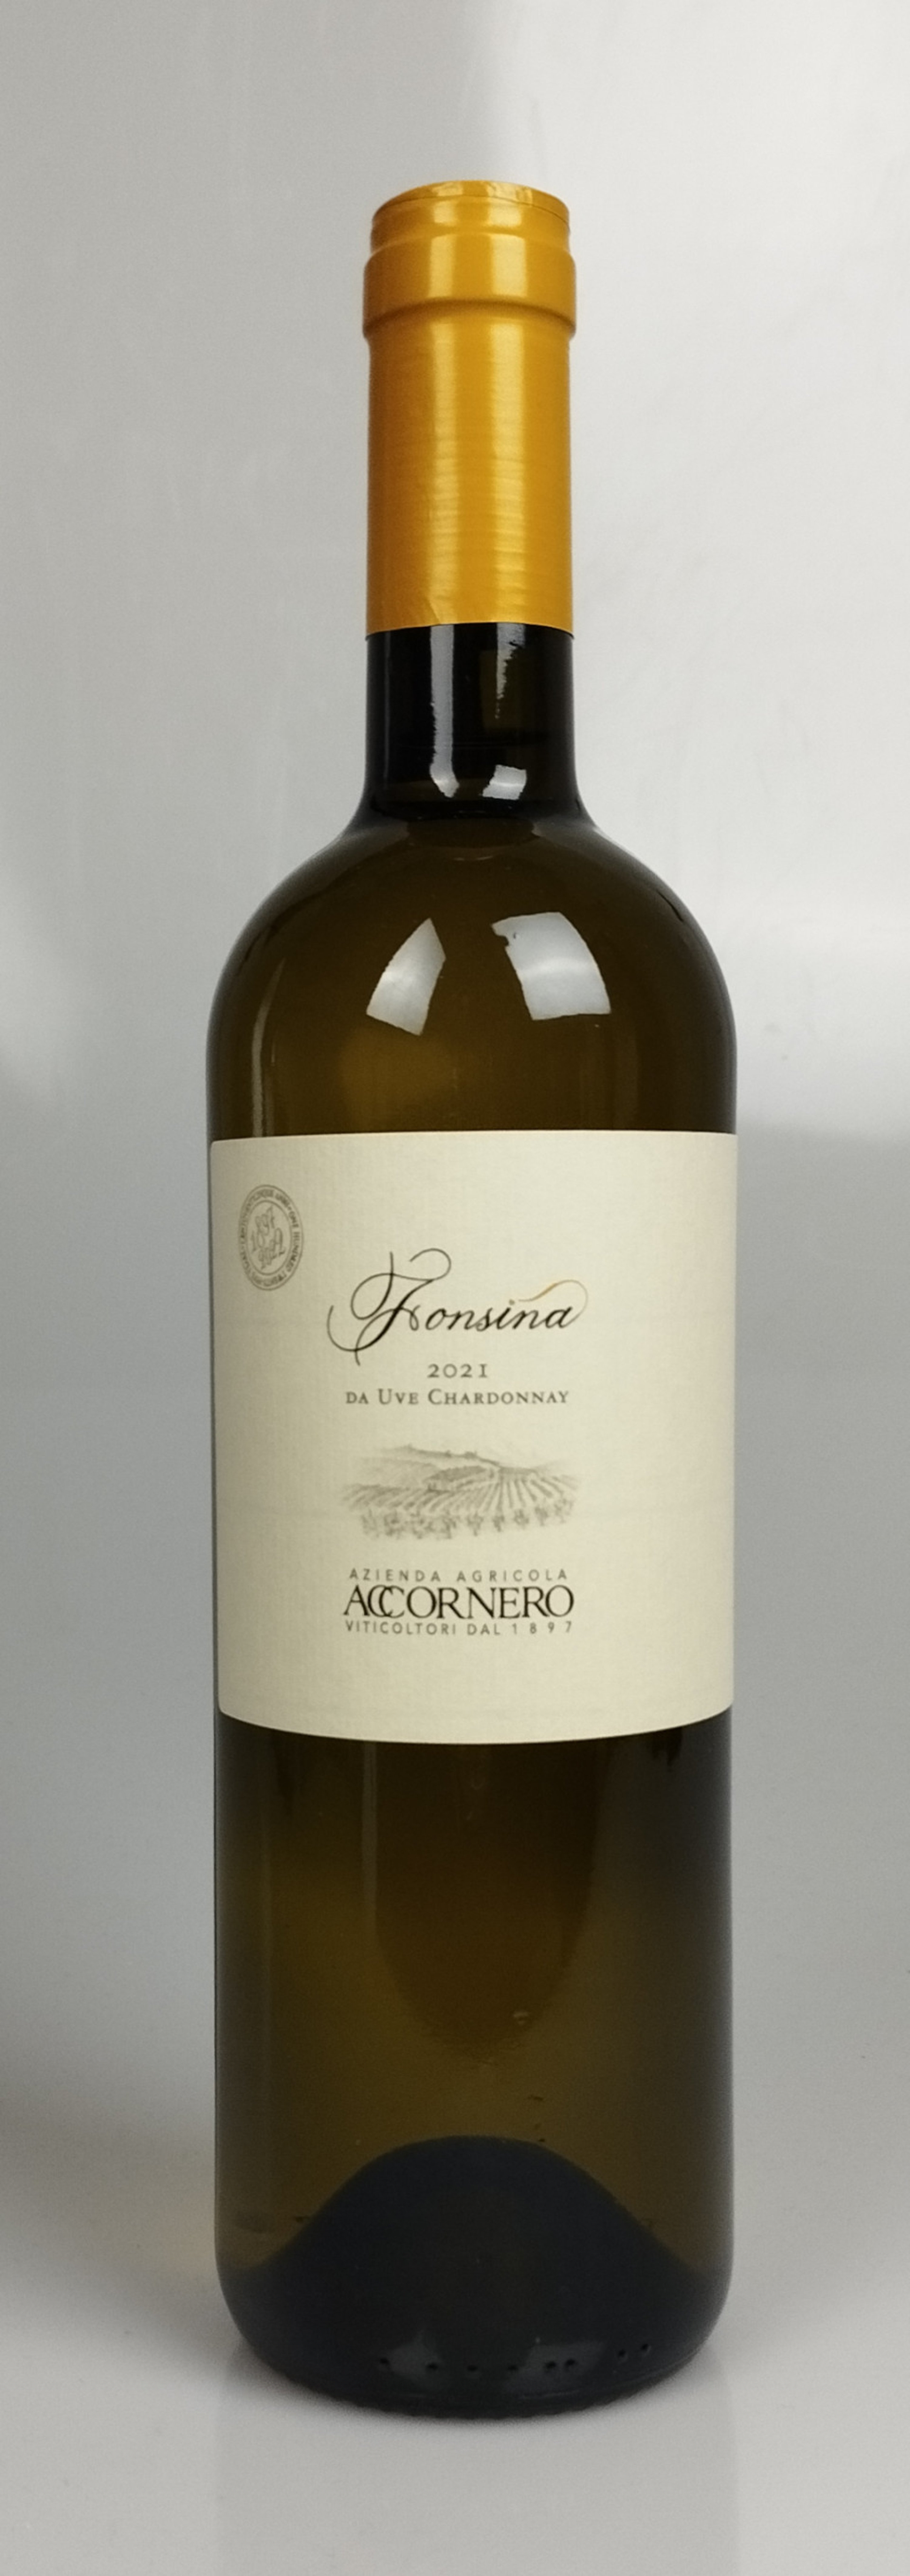 Wein Accornero Fonsina Monferrato Bianco DOC 2021